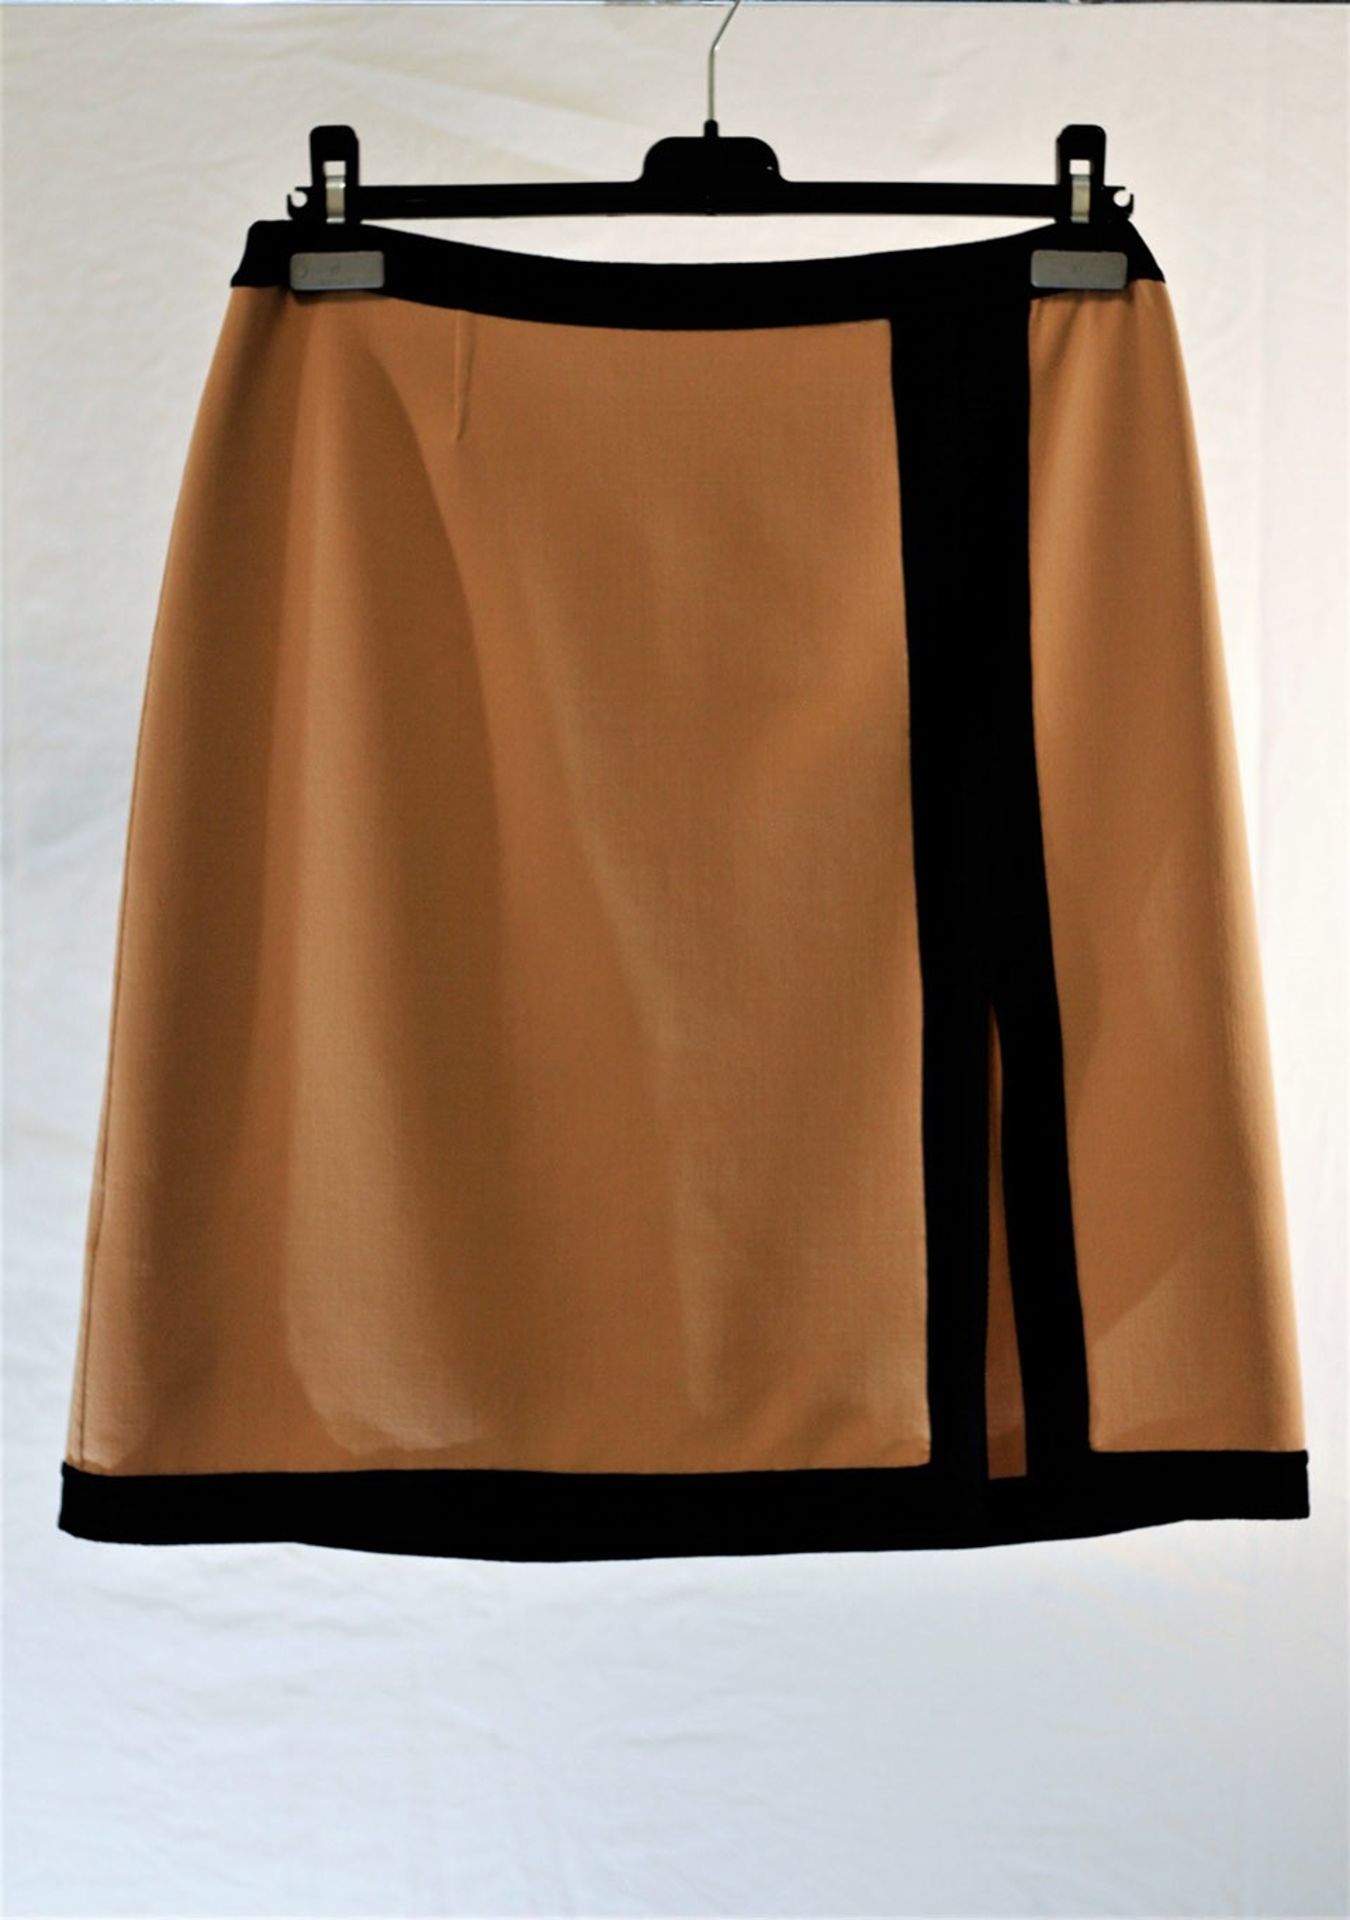 1 x Michael Kors Suntan And Black Skirt - Size: 14 - Material: 96% Virgin Wool, 4% Spandex - From